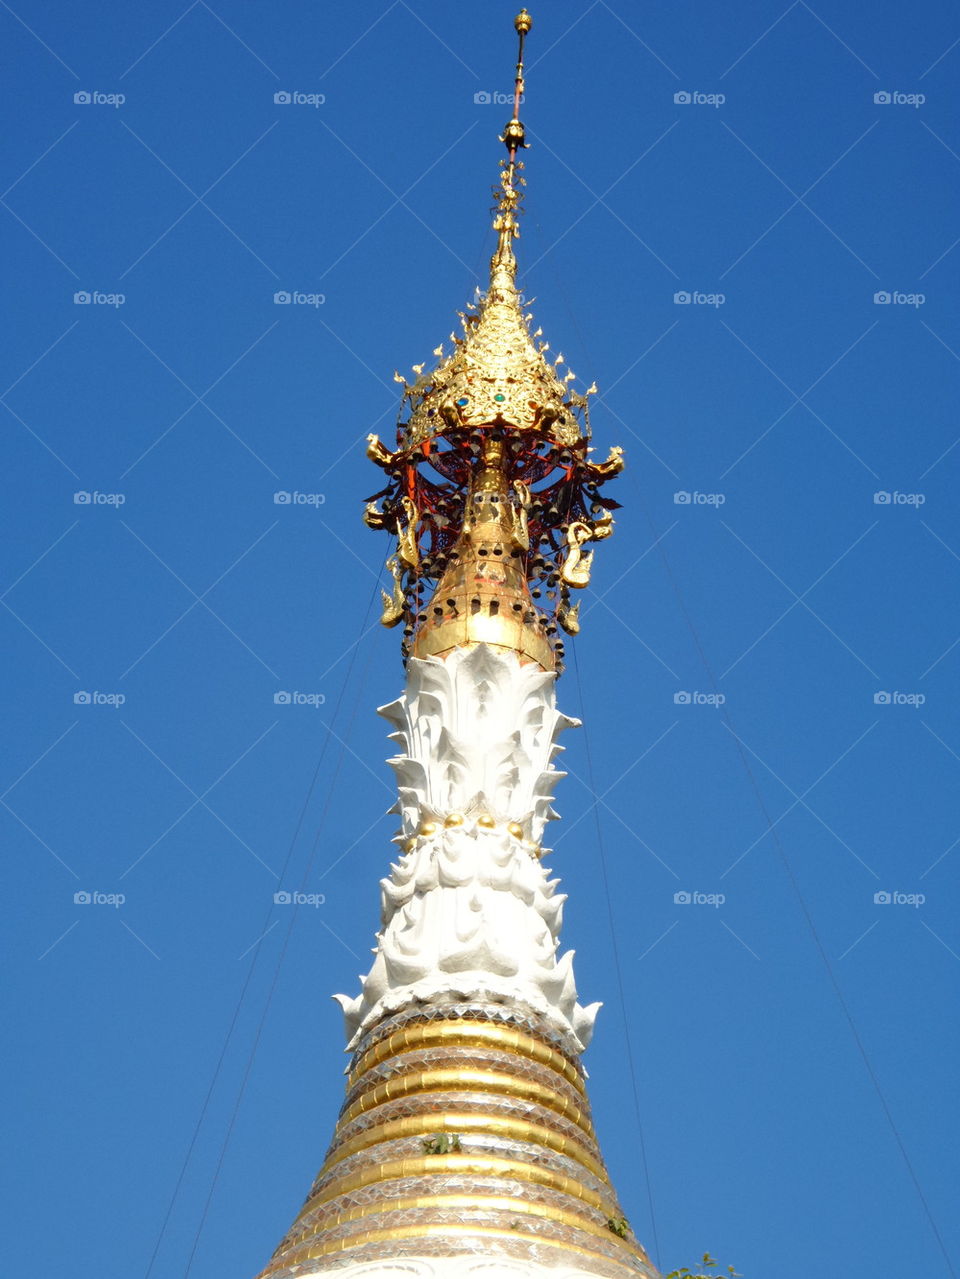 Top of pagoda